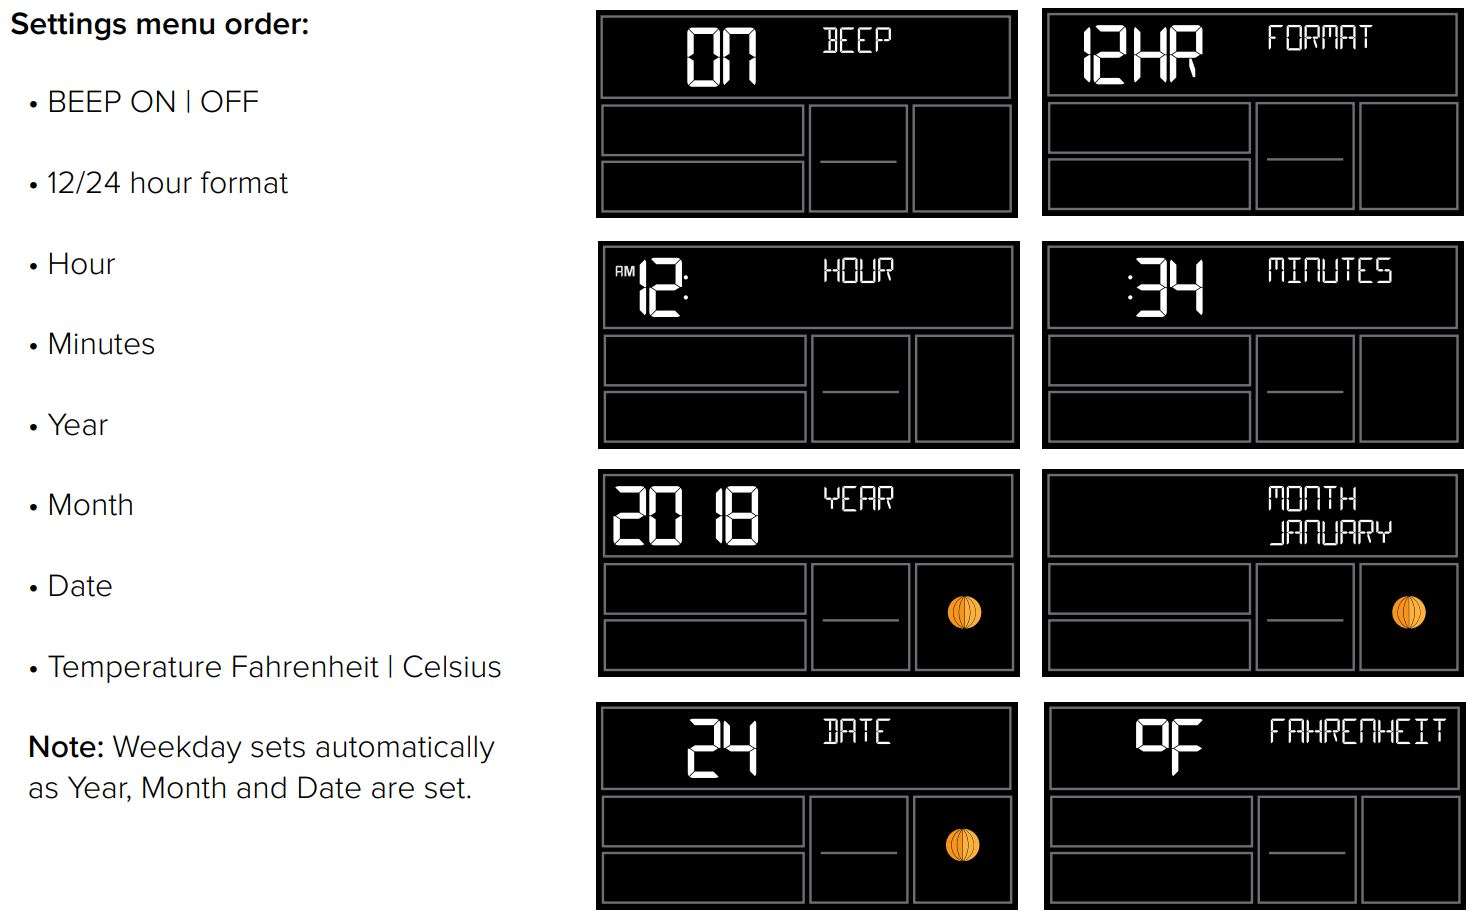 LA Crosse Technology C82929V2 WiFi Projection Alarm Clock with AccuWeather User Manual - SETTINGS MENU